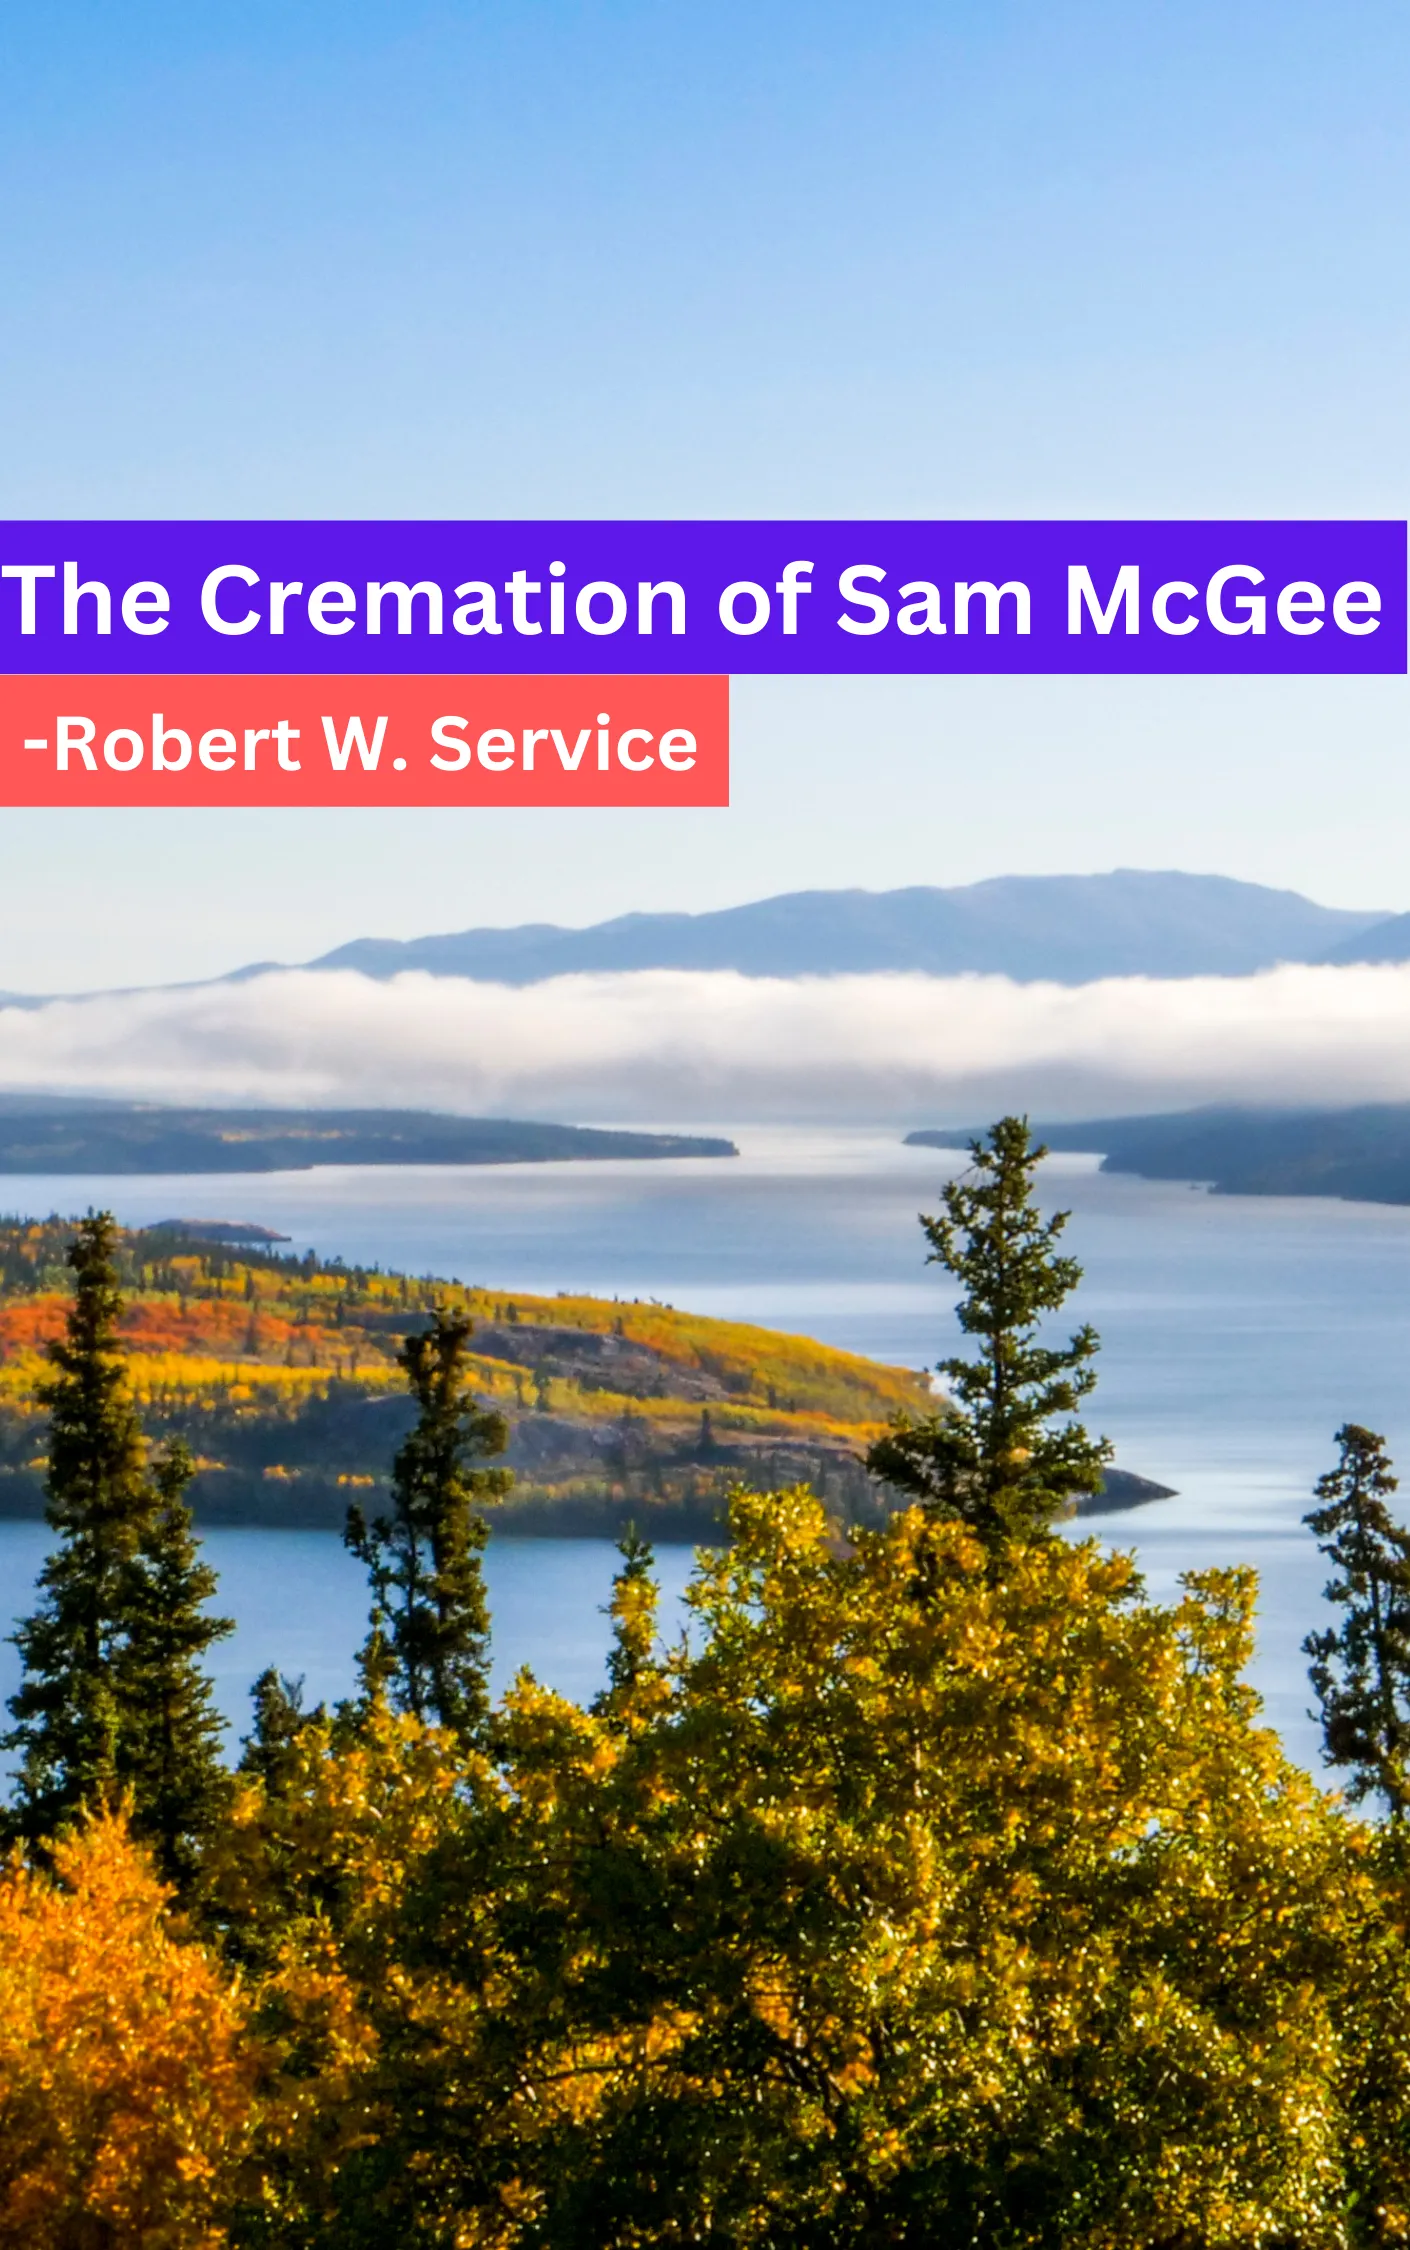 The Cremation of Sam McGee Summary & Analysis